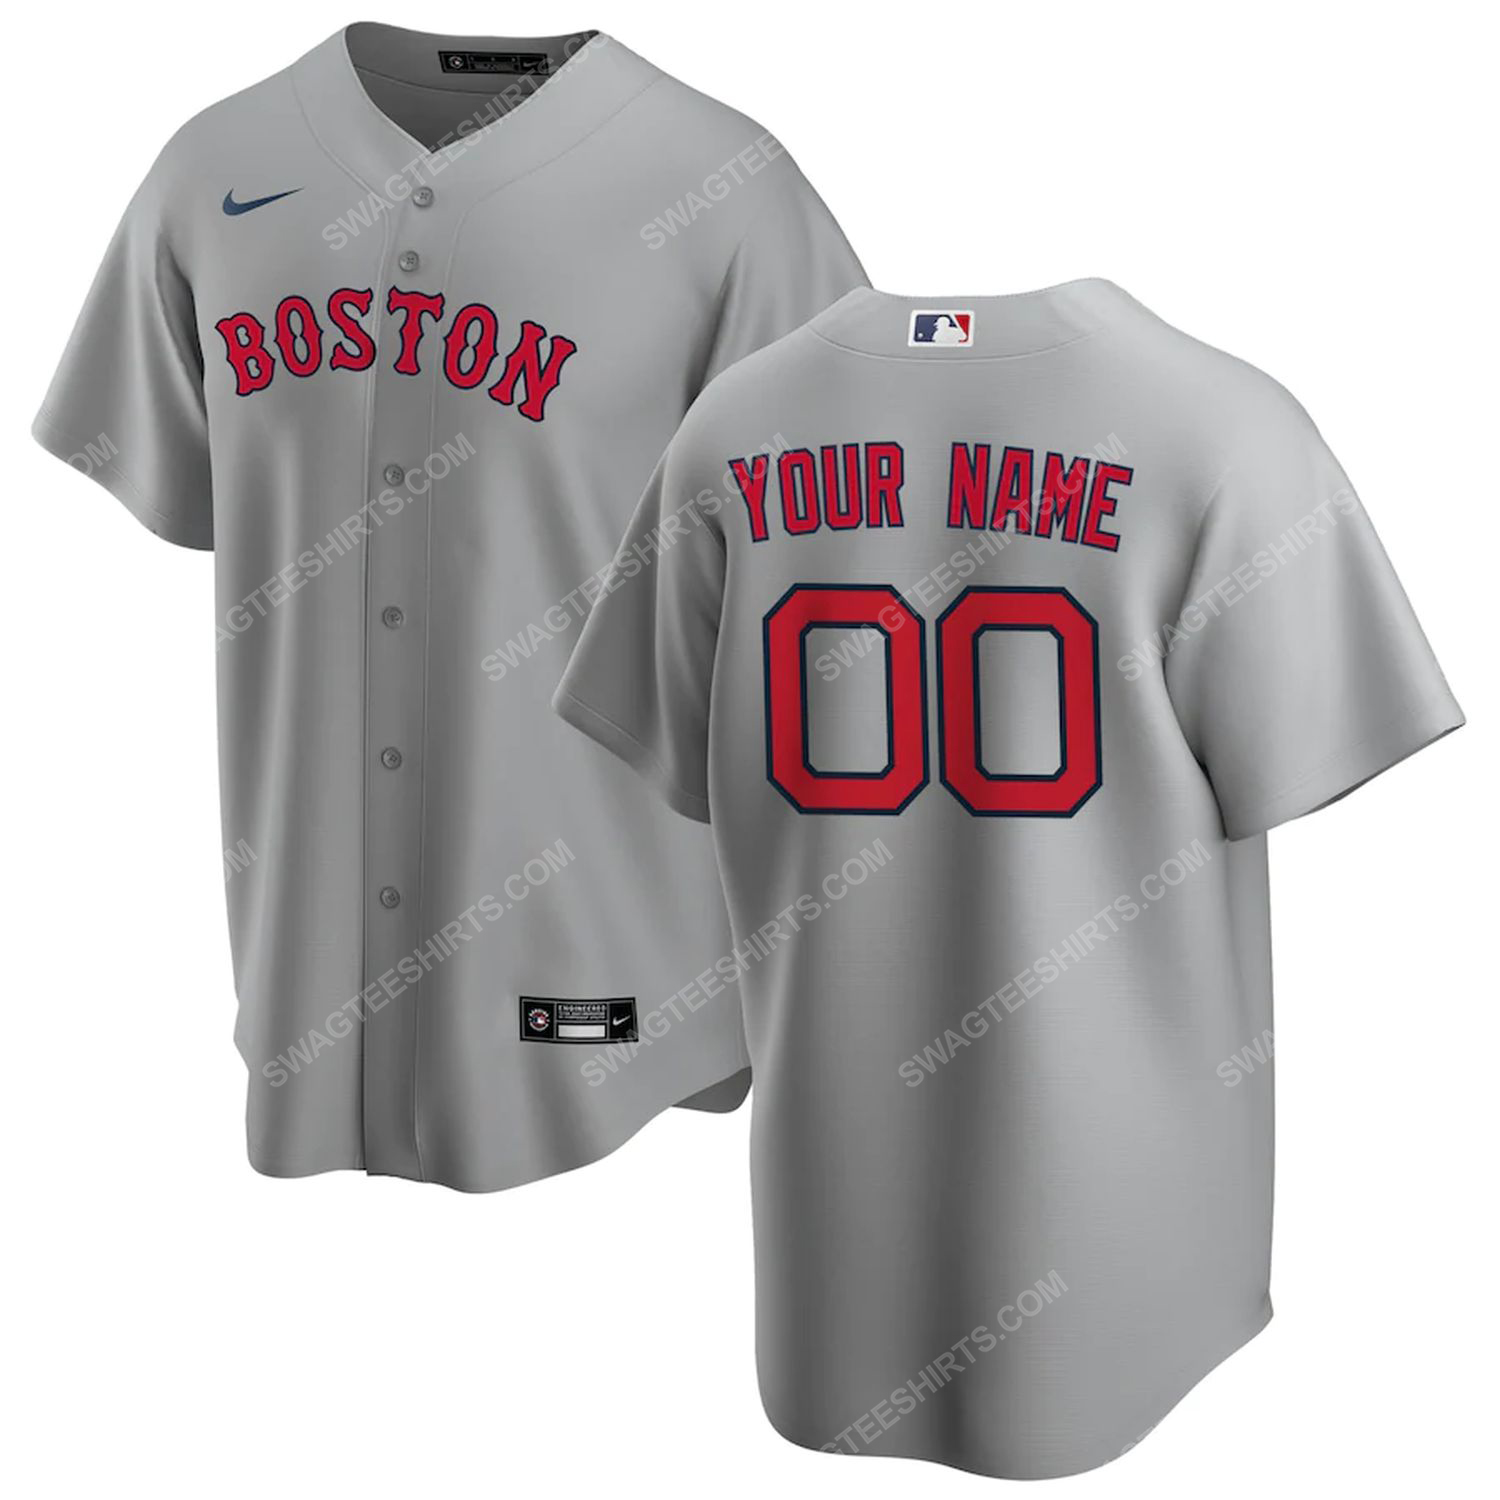 Personalized mlb boston red sox team baseball jersey - gray